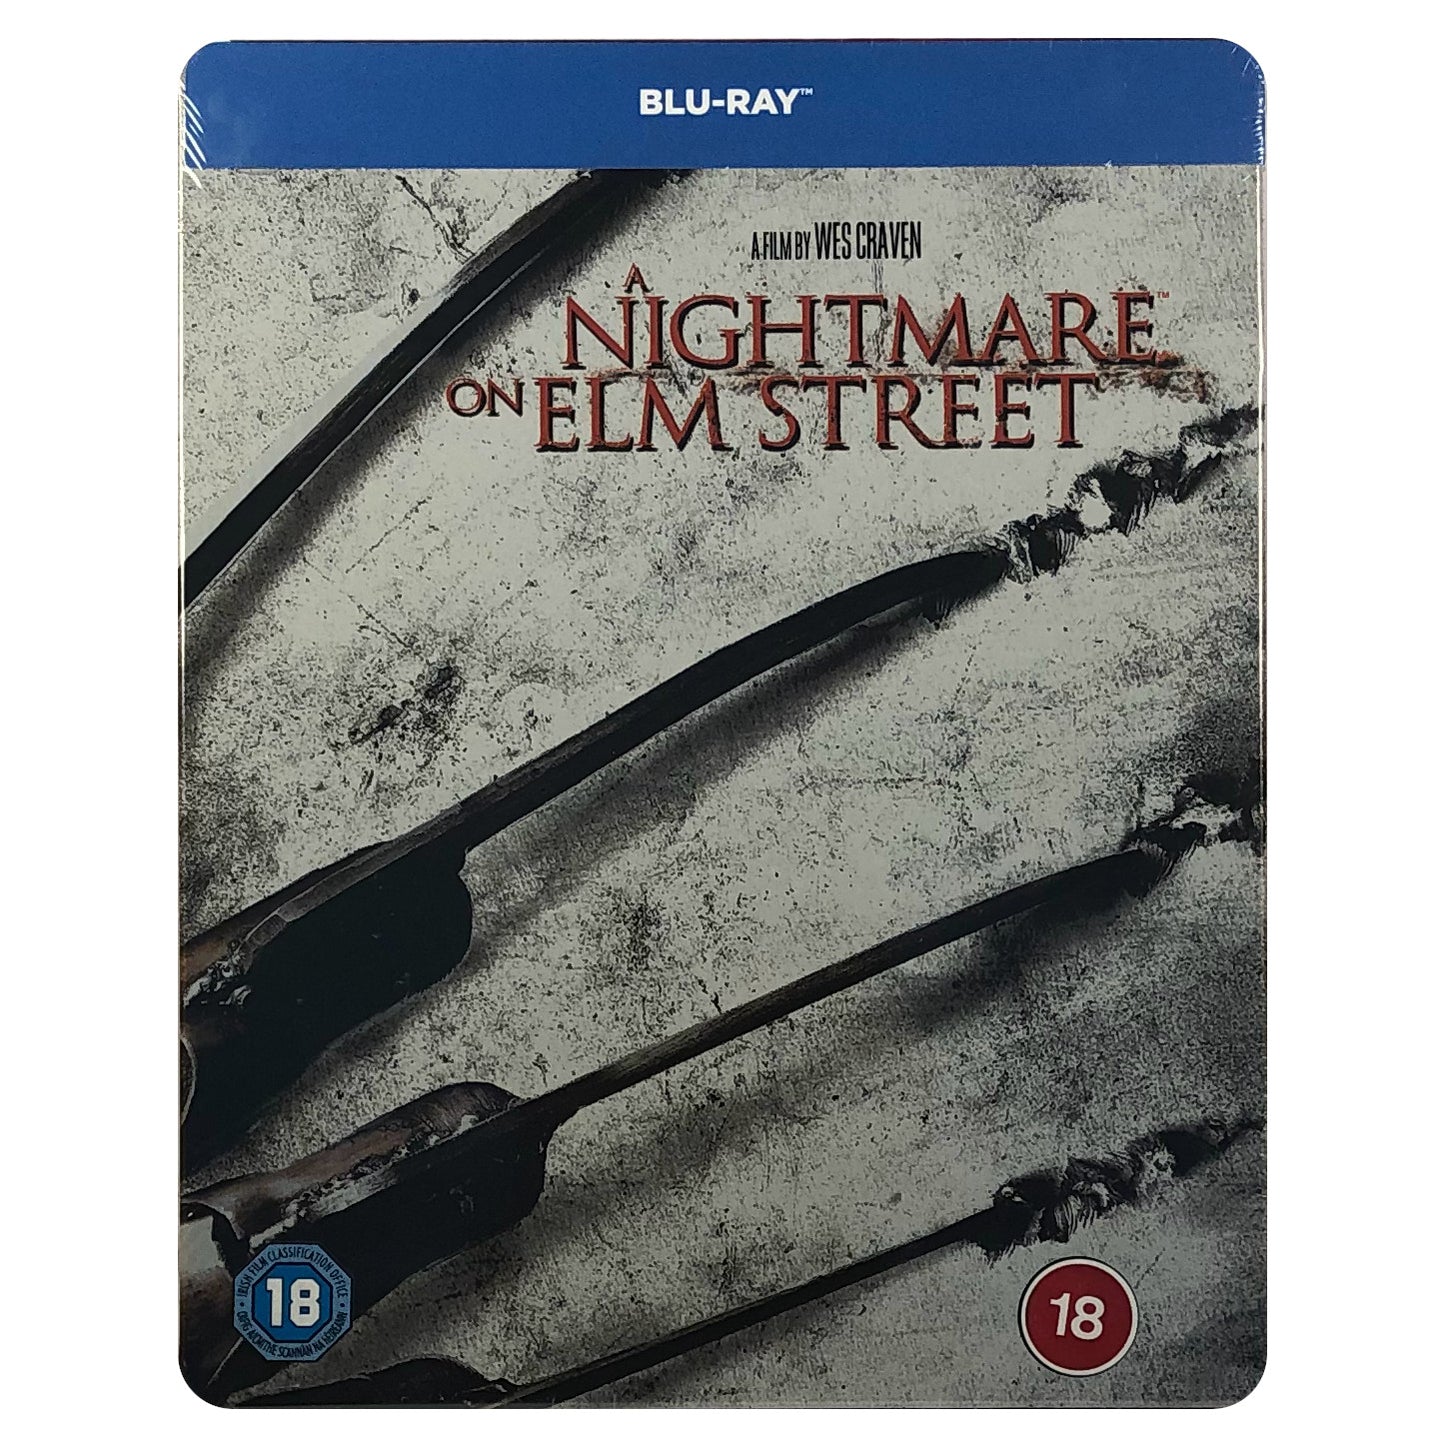 A Nightmare on Elm Street Blu-Ray Steelbook